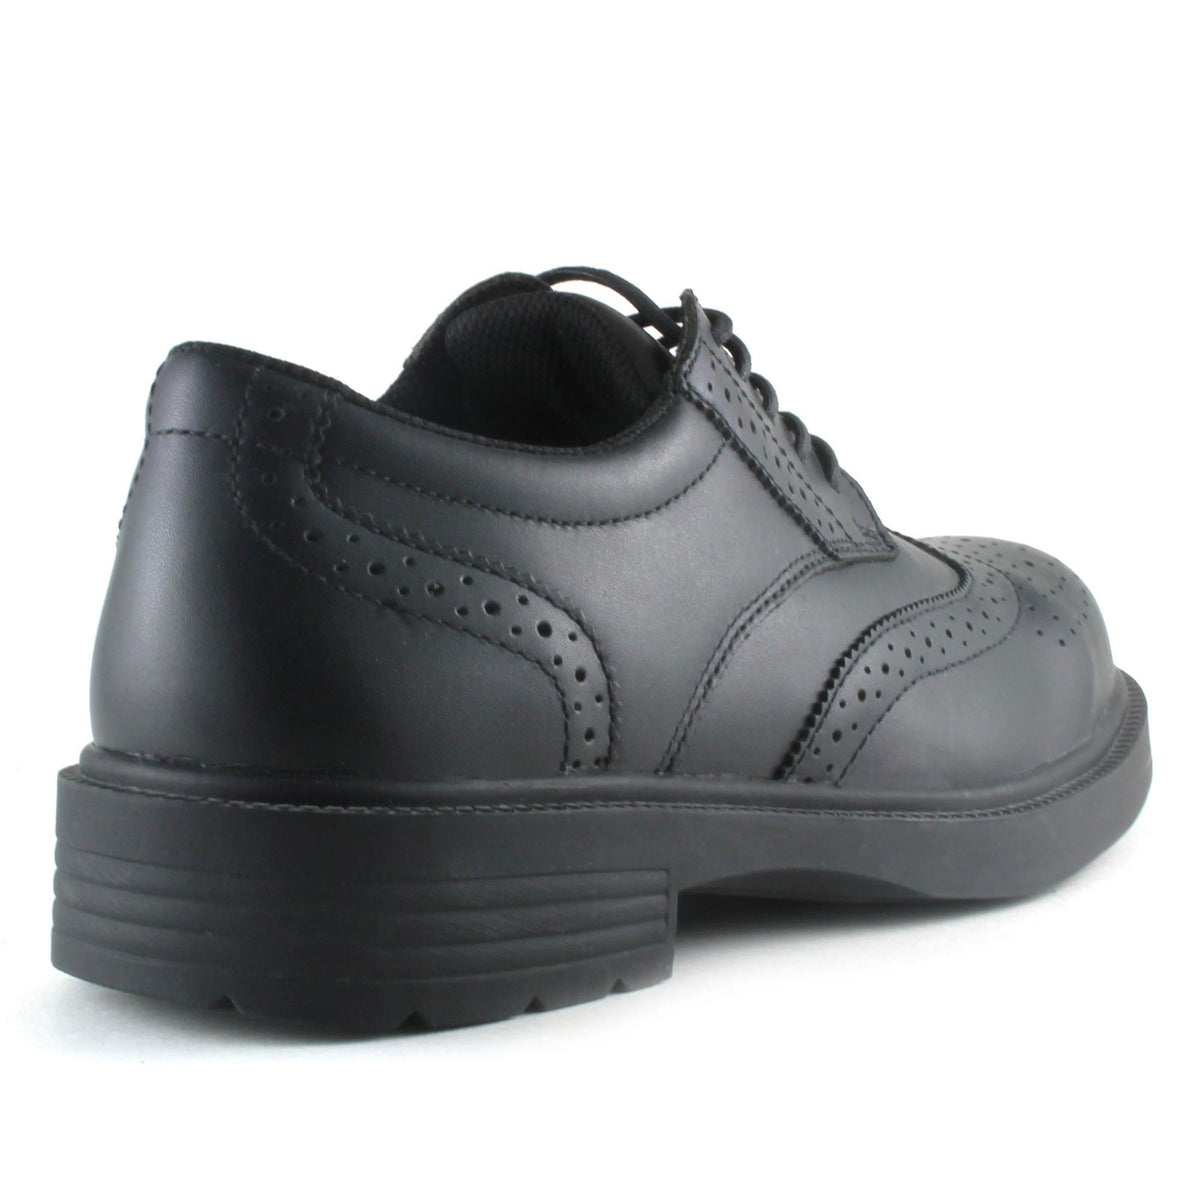 Jb Goodhue Executive 18320 Black Shoes